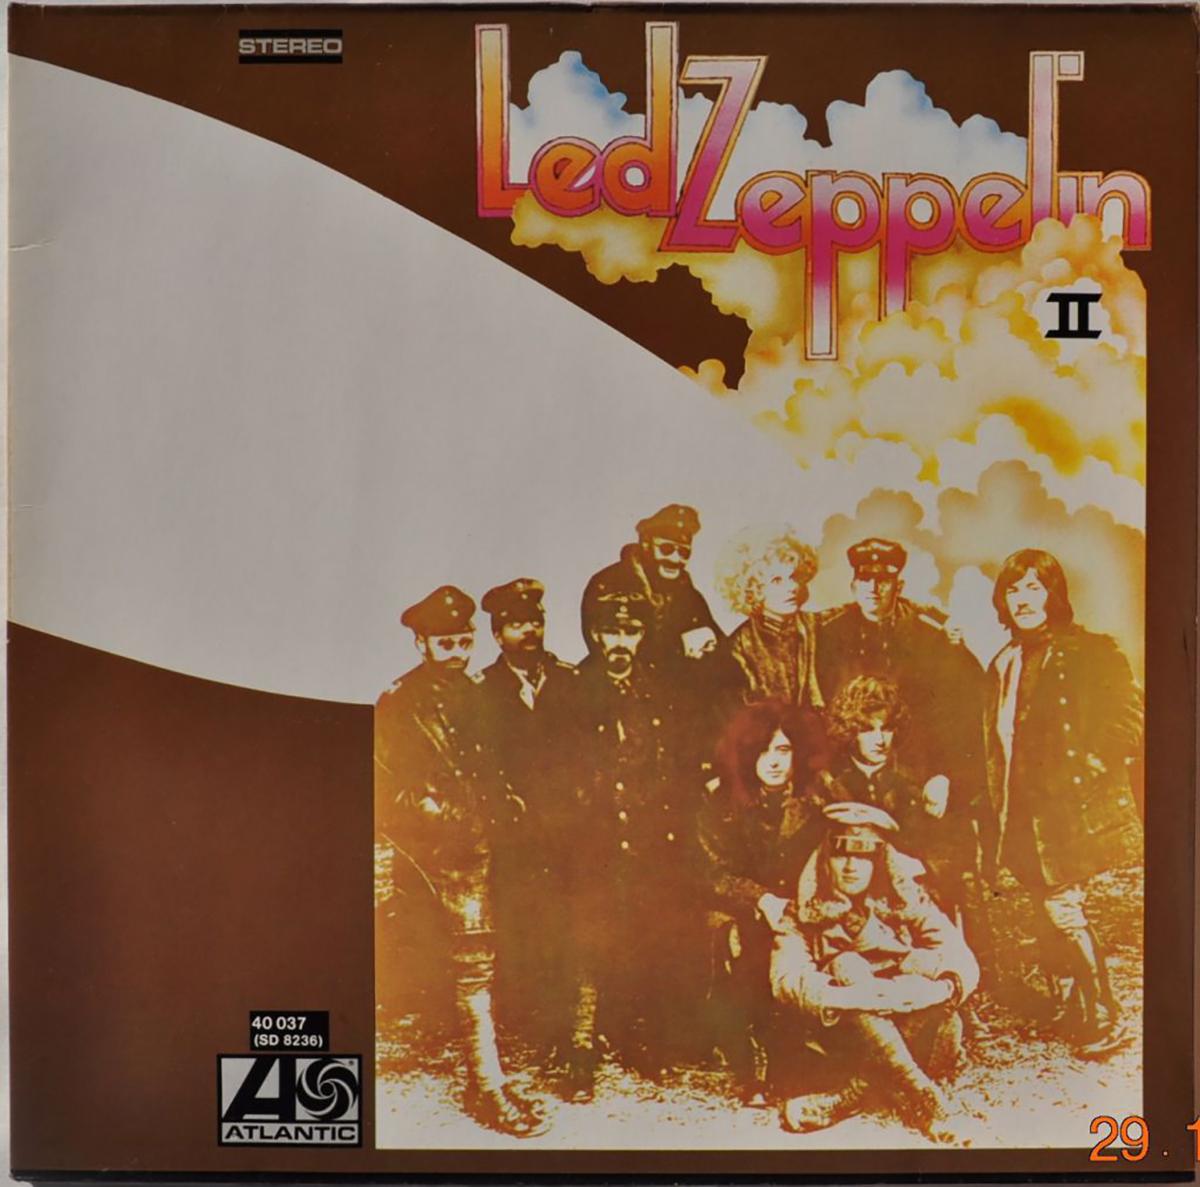 Portada del segundo álbum de estudio de Led Zeppelin II